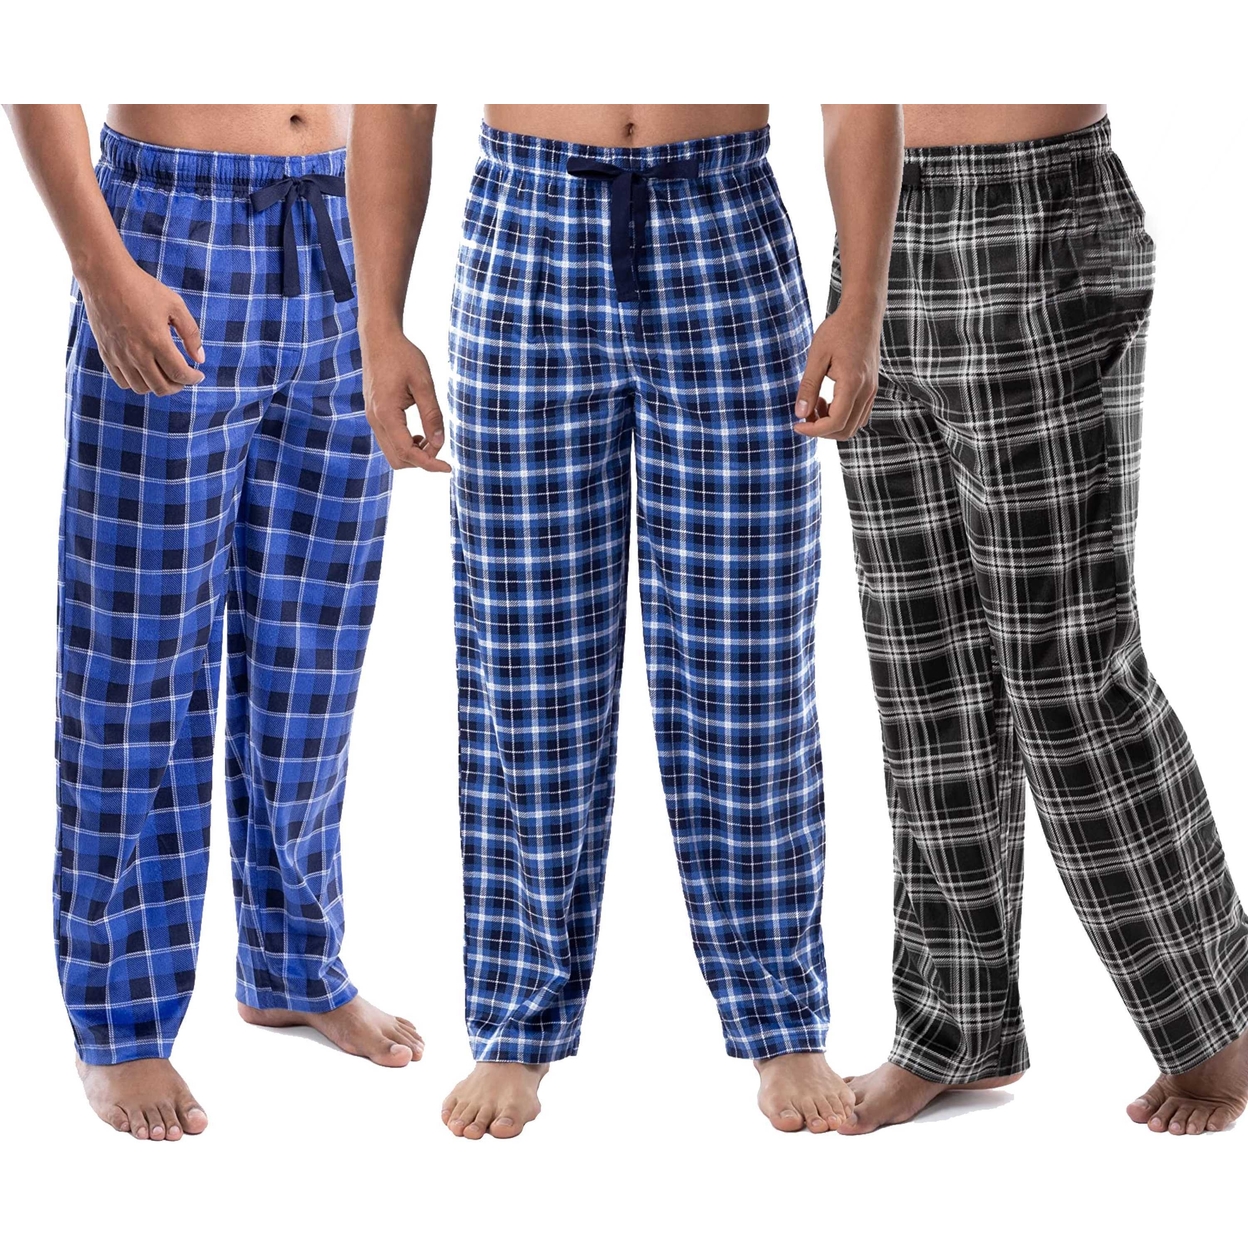 3-Pack: Men's Ultra-Soft Cozy Lounge Sleep Micro Fleece Plaid Pajama Pants - Small